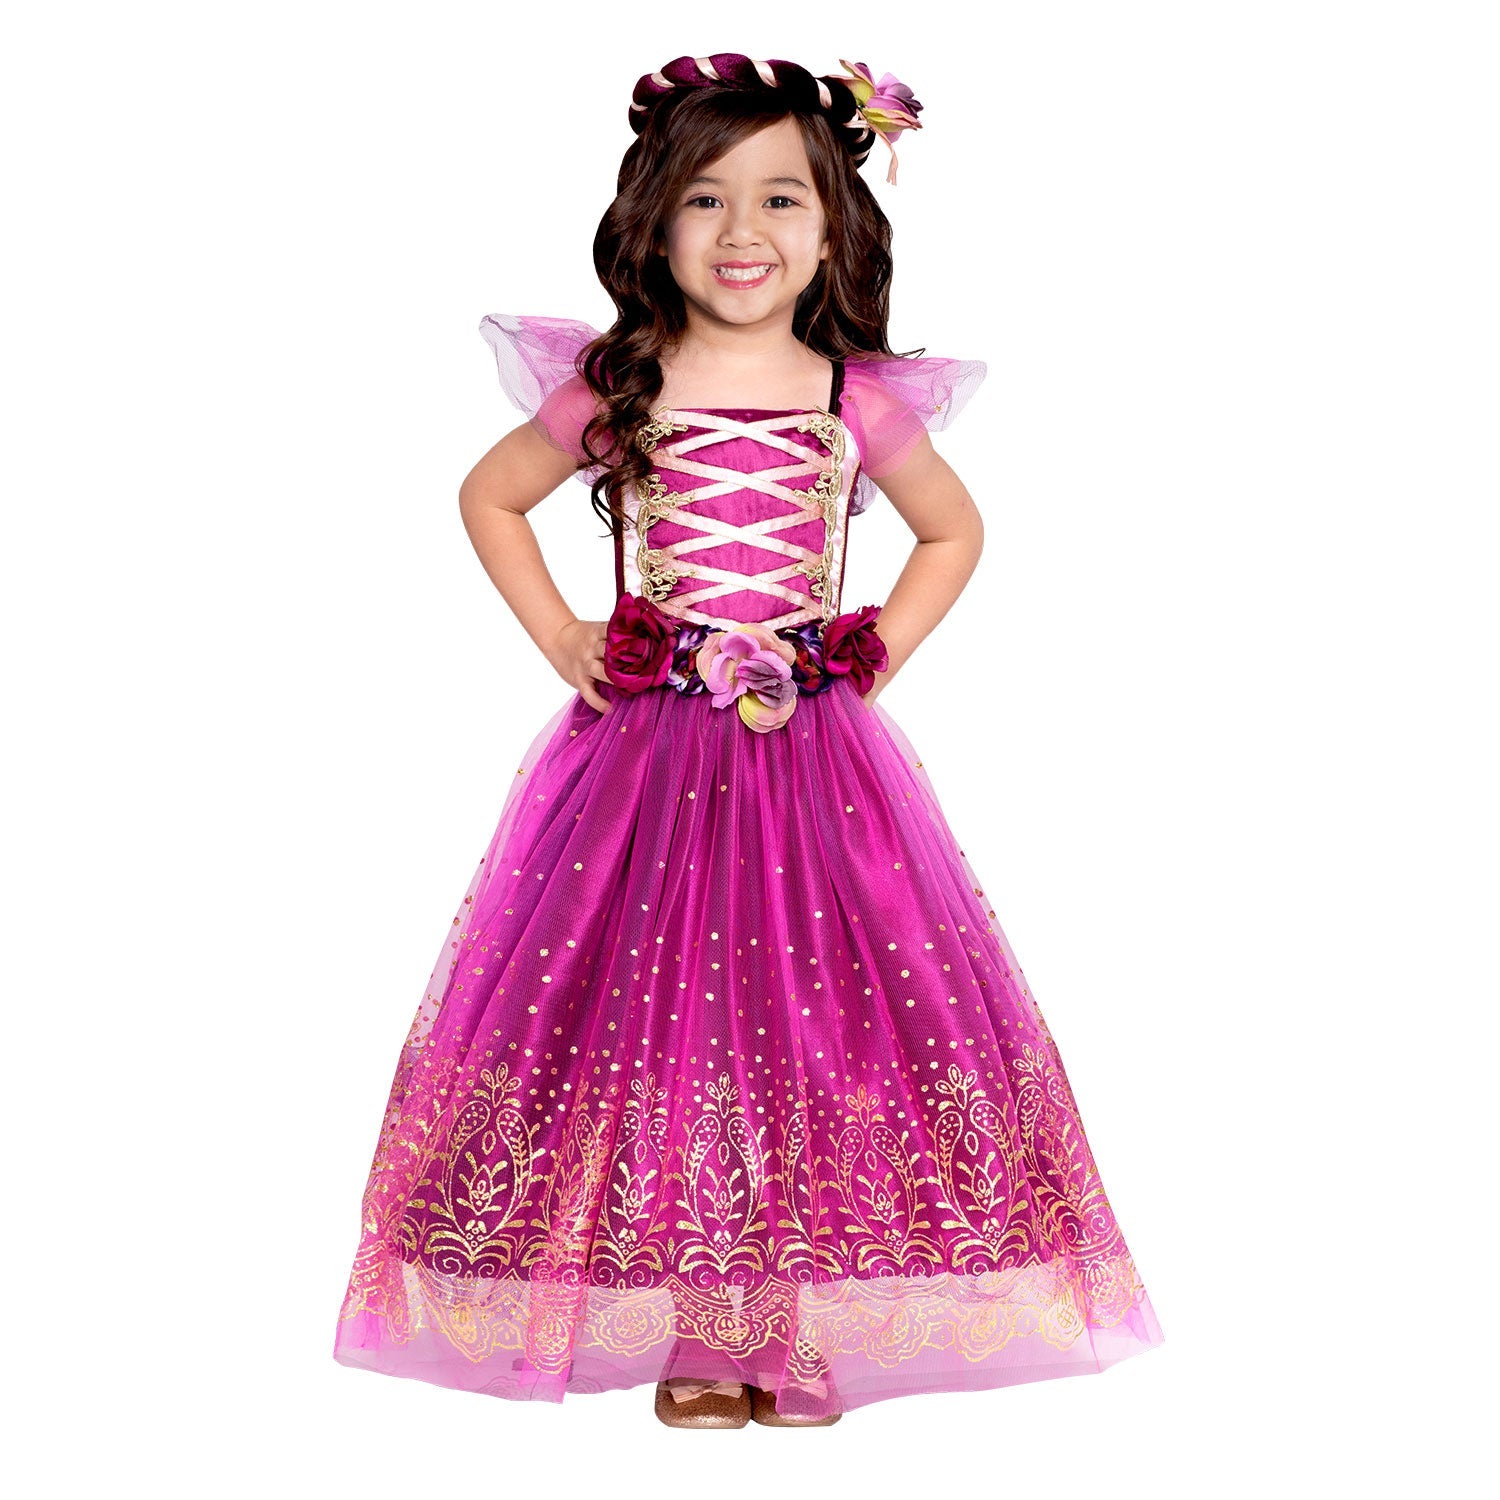 Plum Princess Costume includes dress and headband